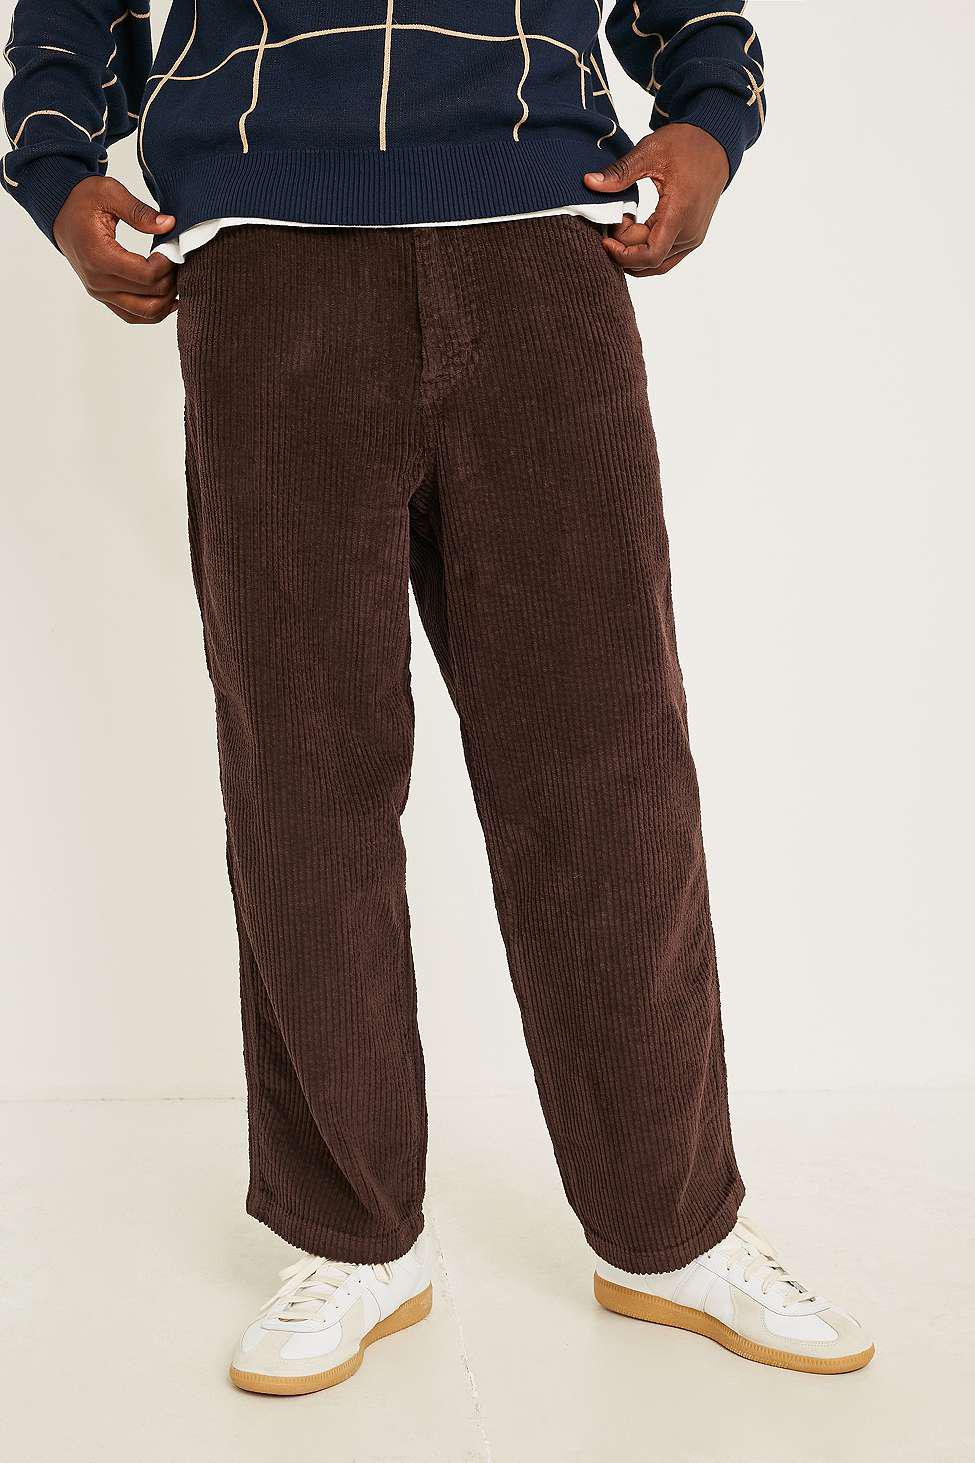 Brown corduroy pants on Pinterest